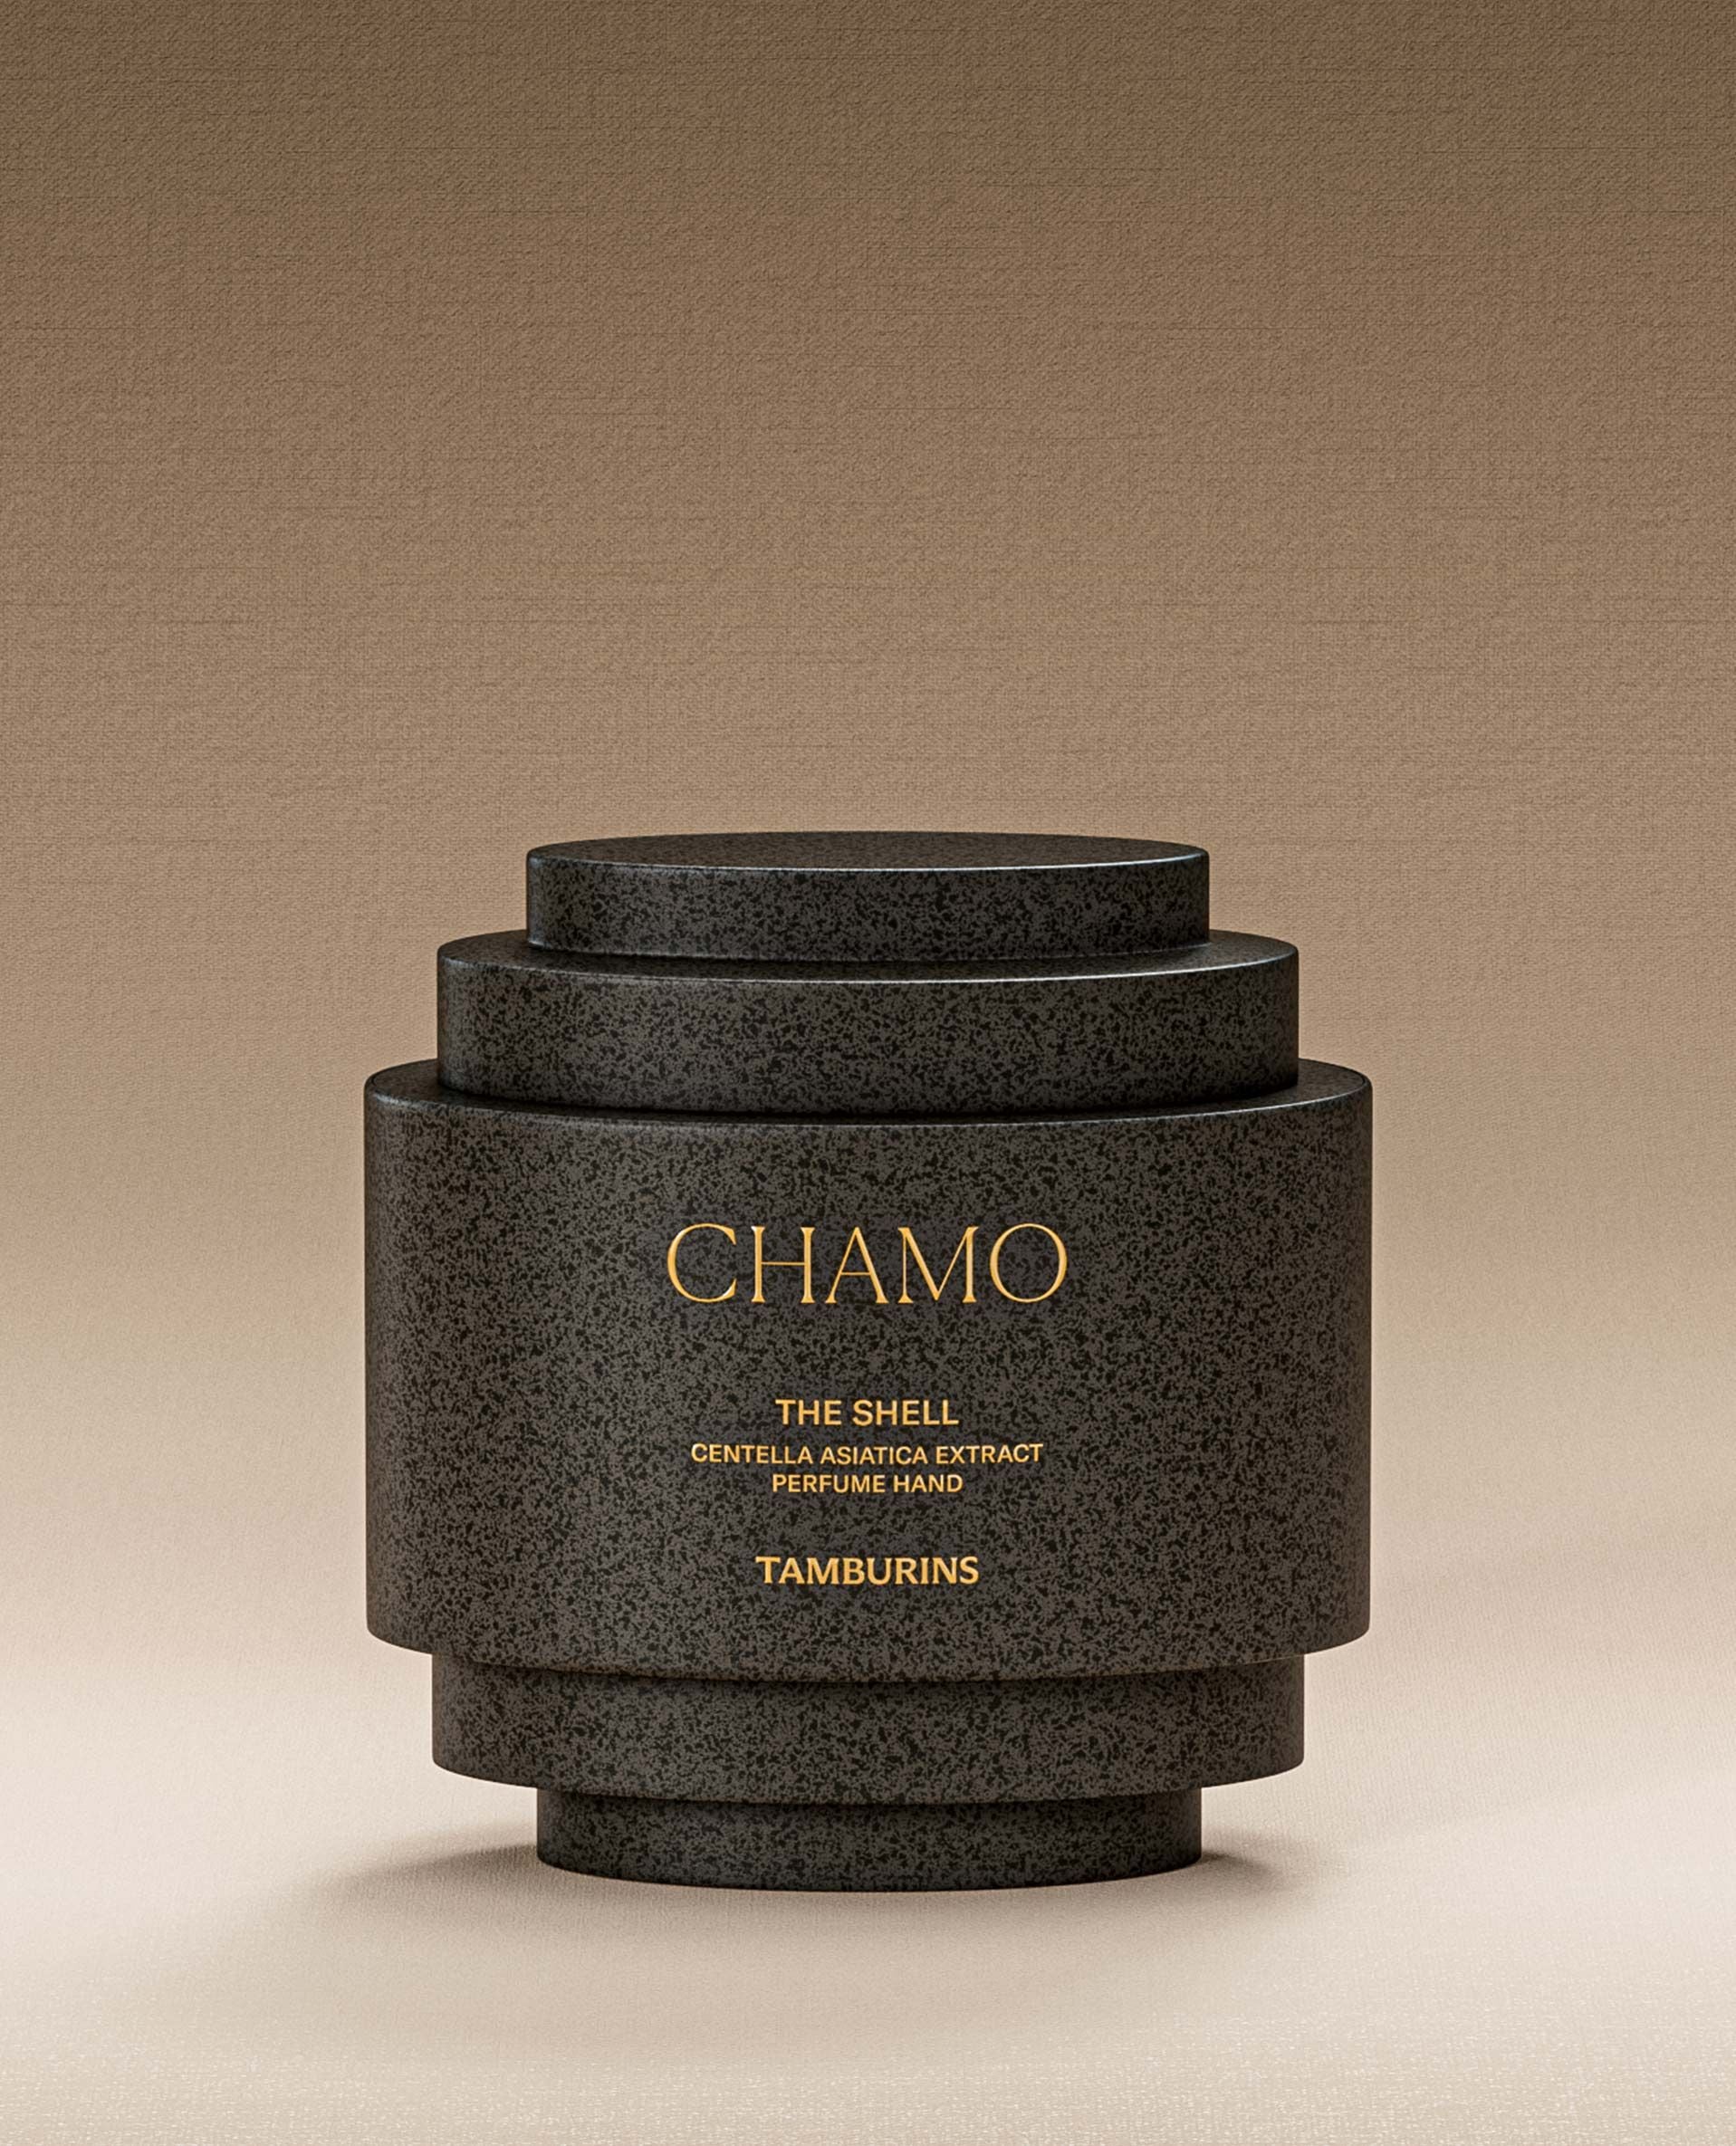 TAMBURINS PERFUME SHELL X CHAMO 30ml